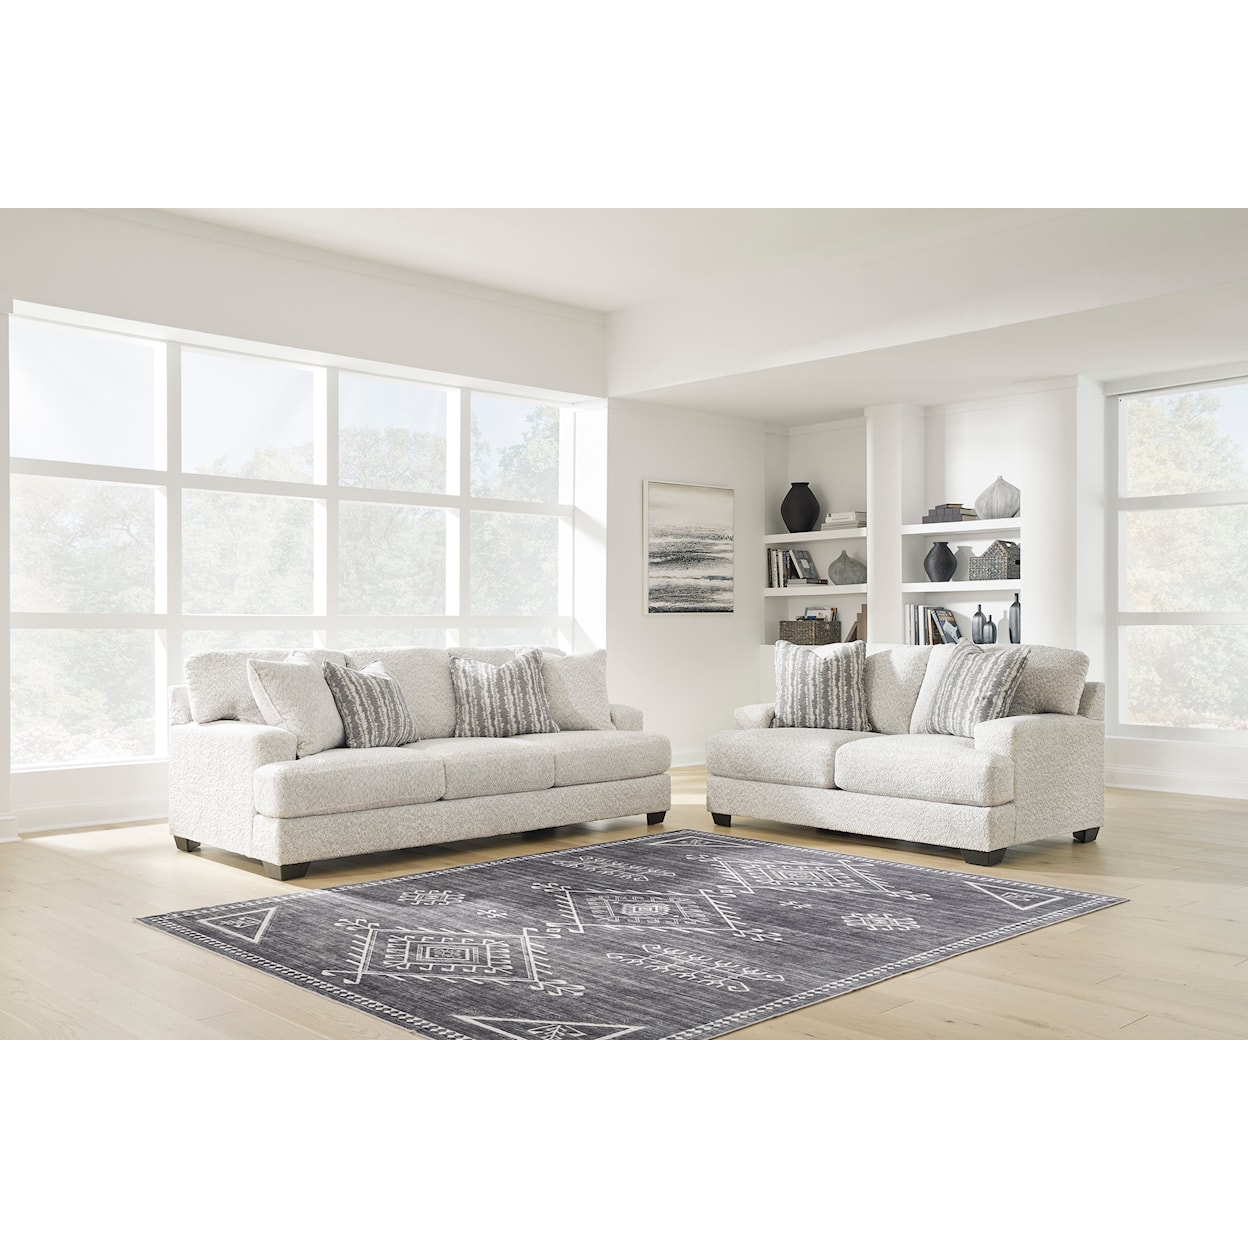 Ashley Furniture Signature Design Brebryan 2-Piece Living Room Set